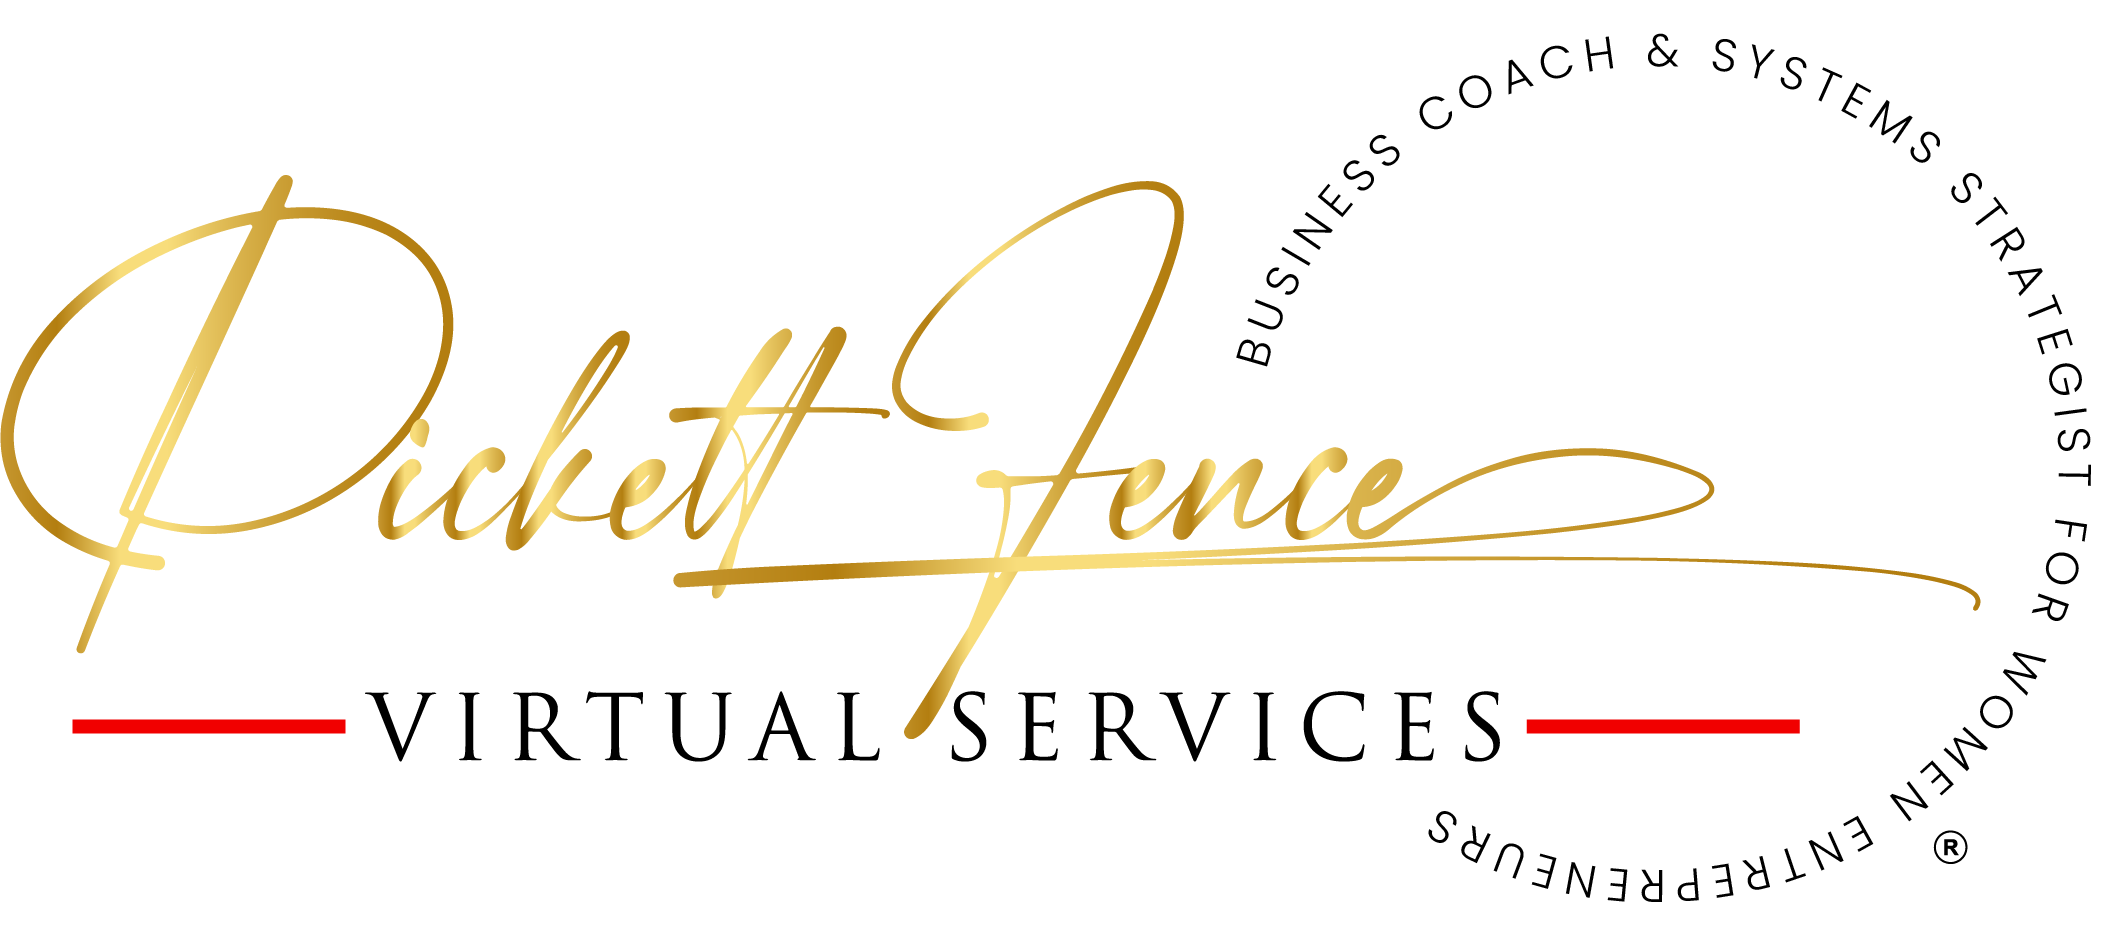 Pickett Fence Virtual Services